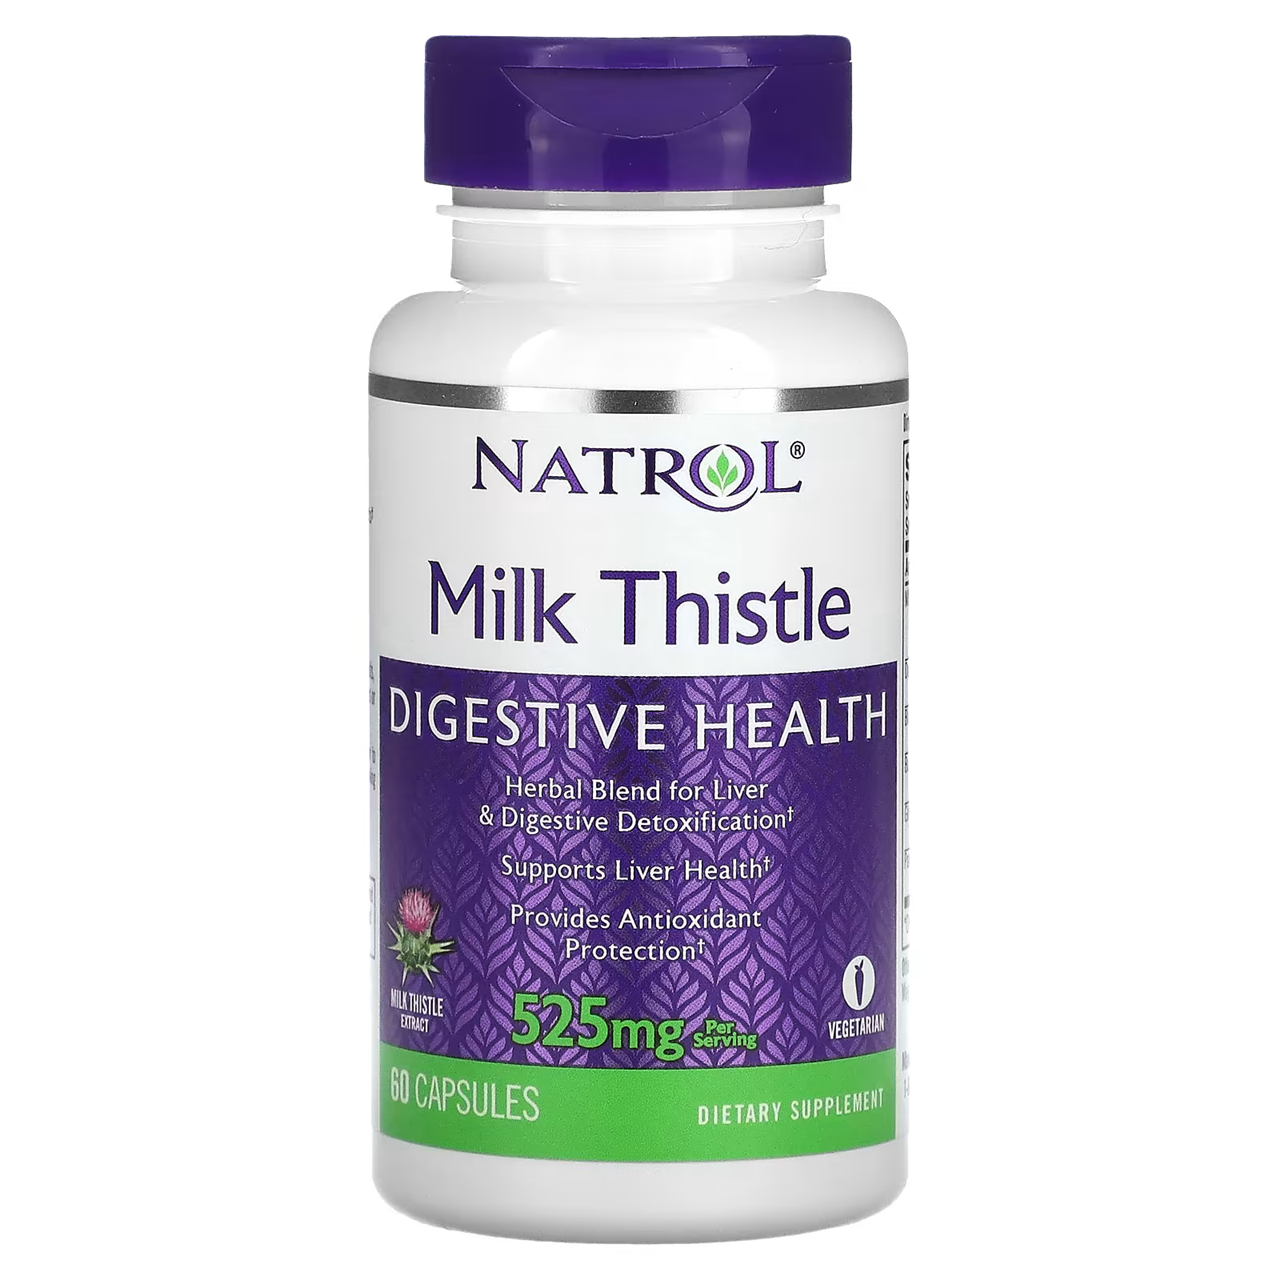 Natrol Milk Thistle Digestive Health / 60 Capsules